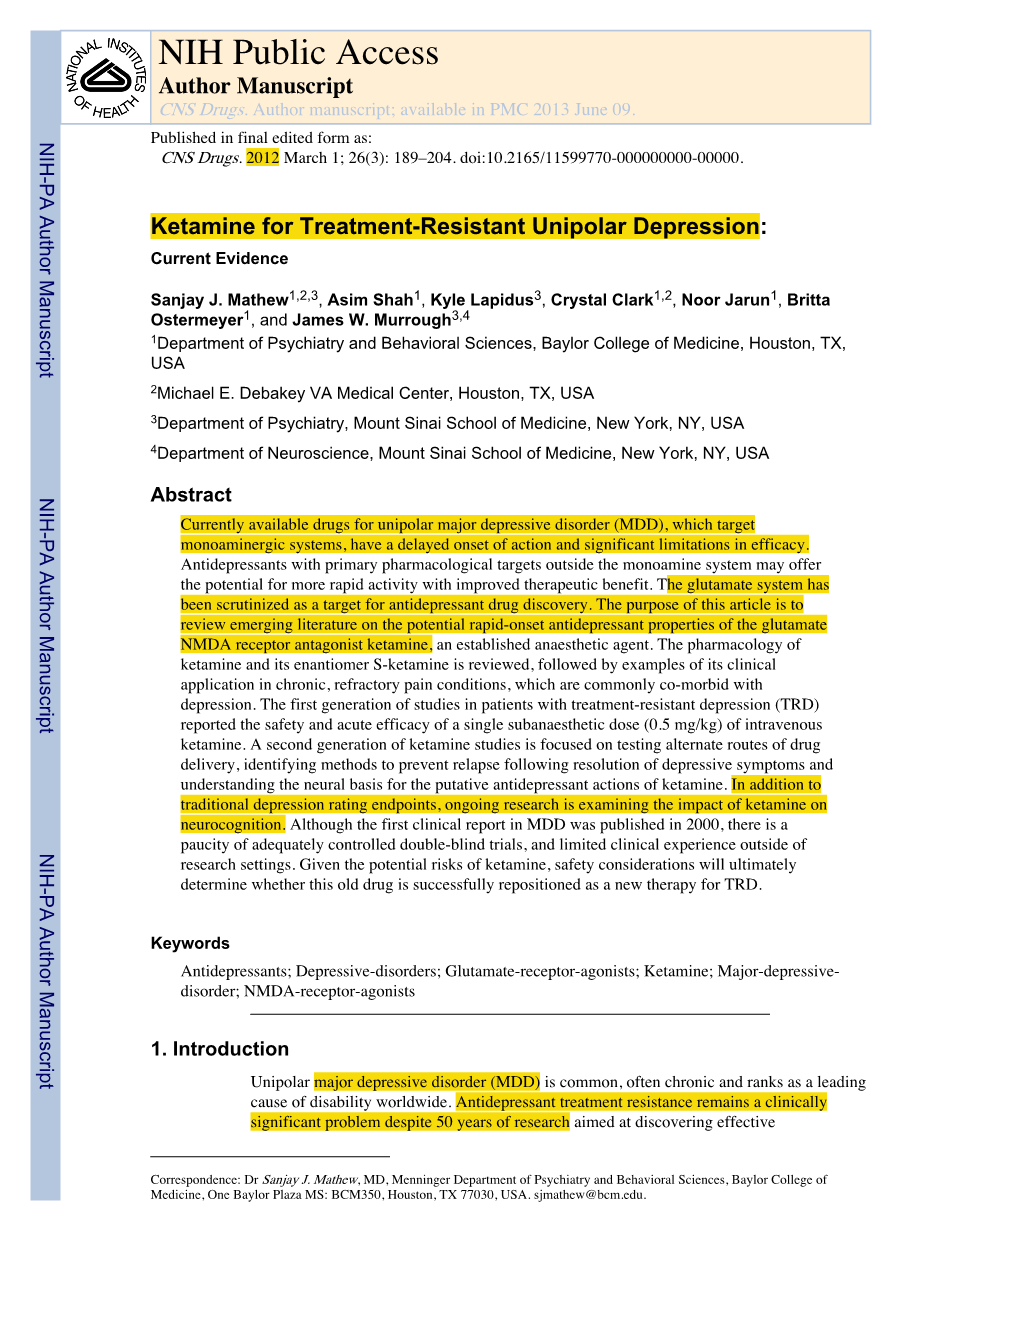 Ketamine for Treatment-Resistant Unipolar Depression: Current Evidence